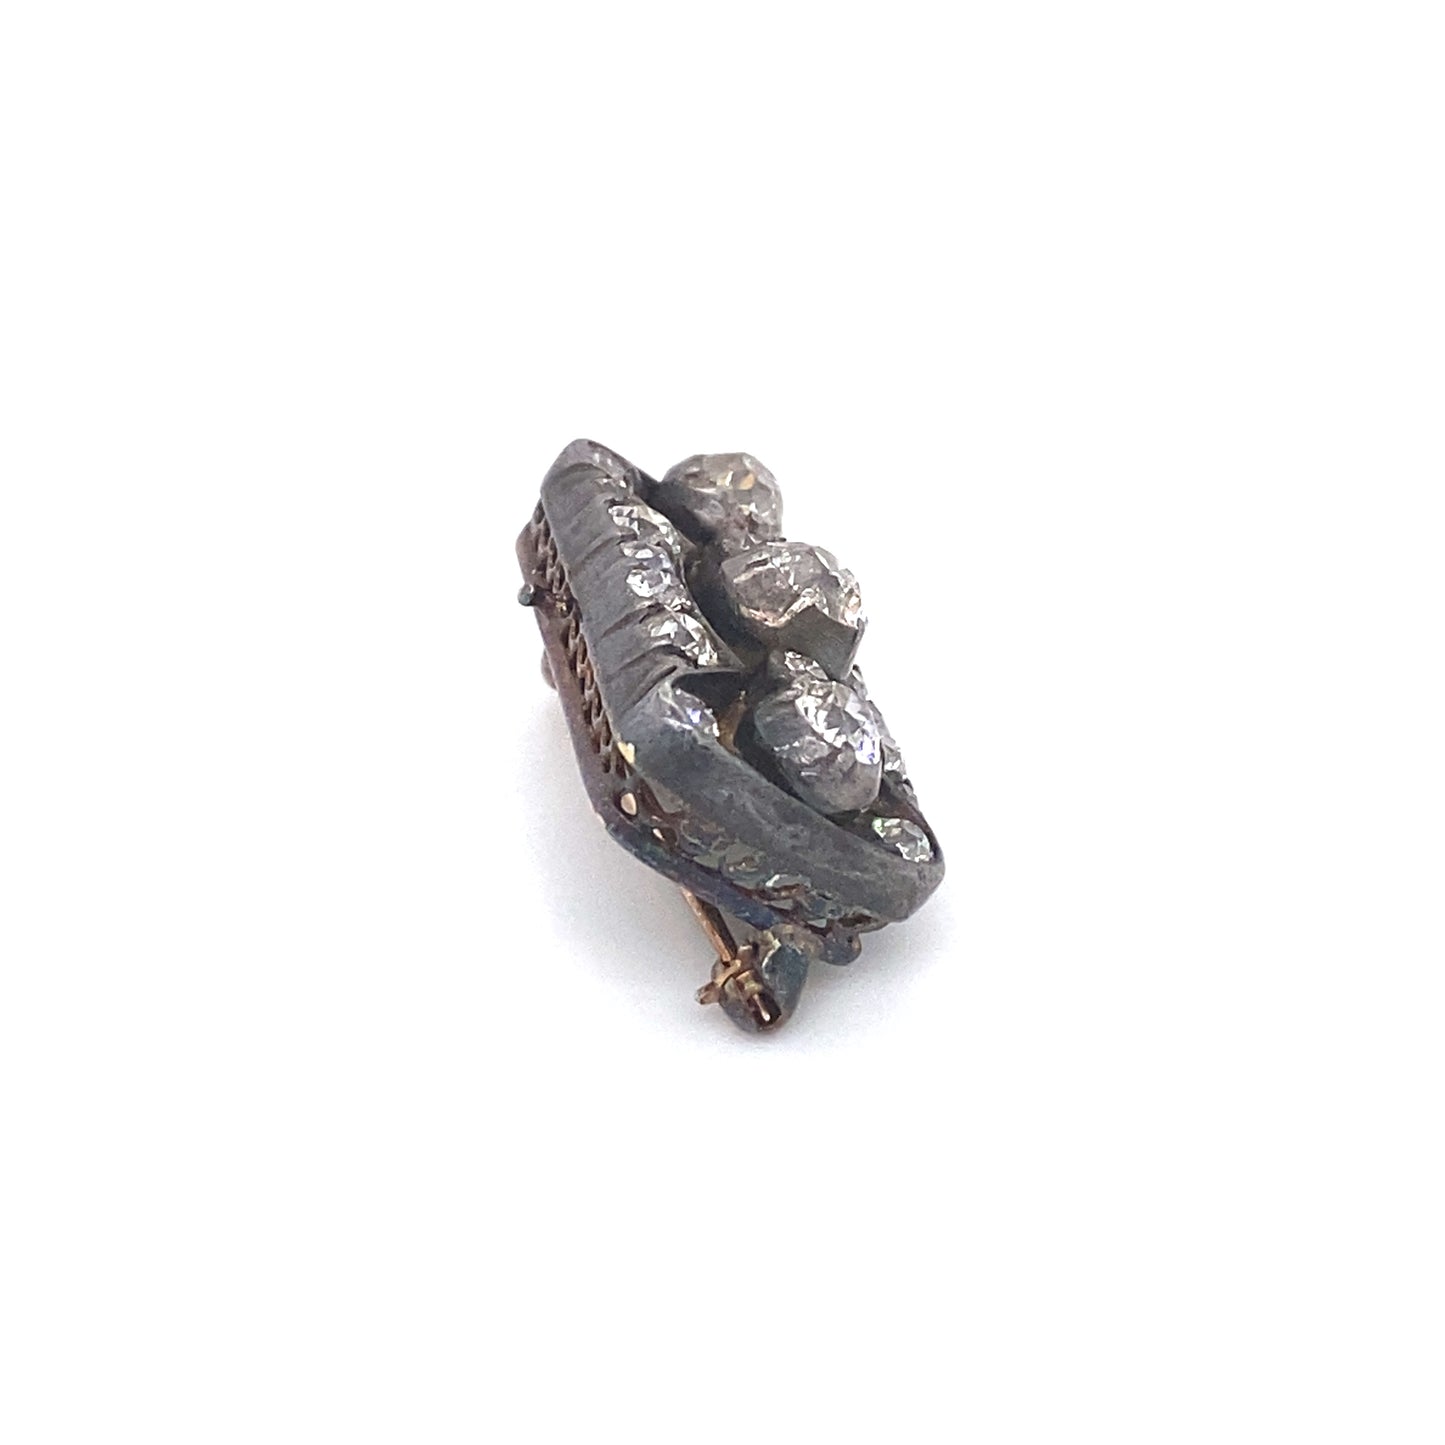 Circa 1810 Georgian 2.0ct Old Mine Cut Diamond Brooch in Silver and Gold